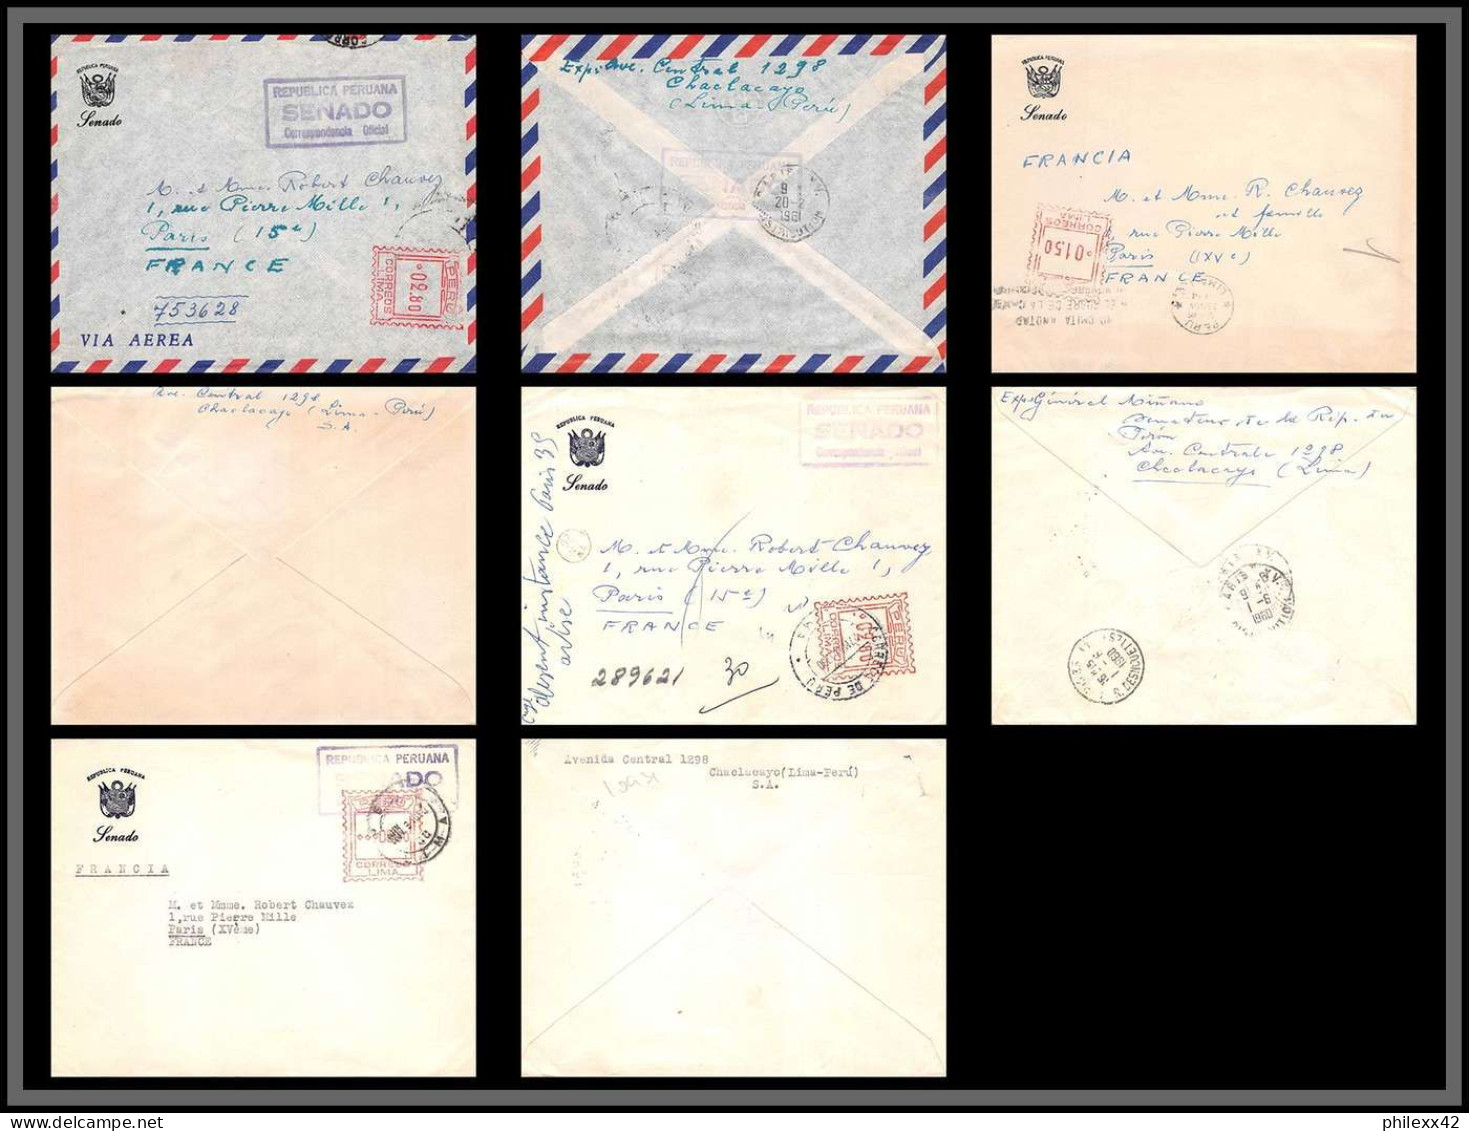 10931 SENADO CORRESPONDENCIA OFICIAL 1960 Lettre Cover Perou Peru  - Pérou